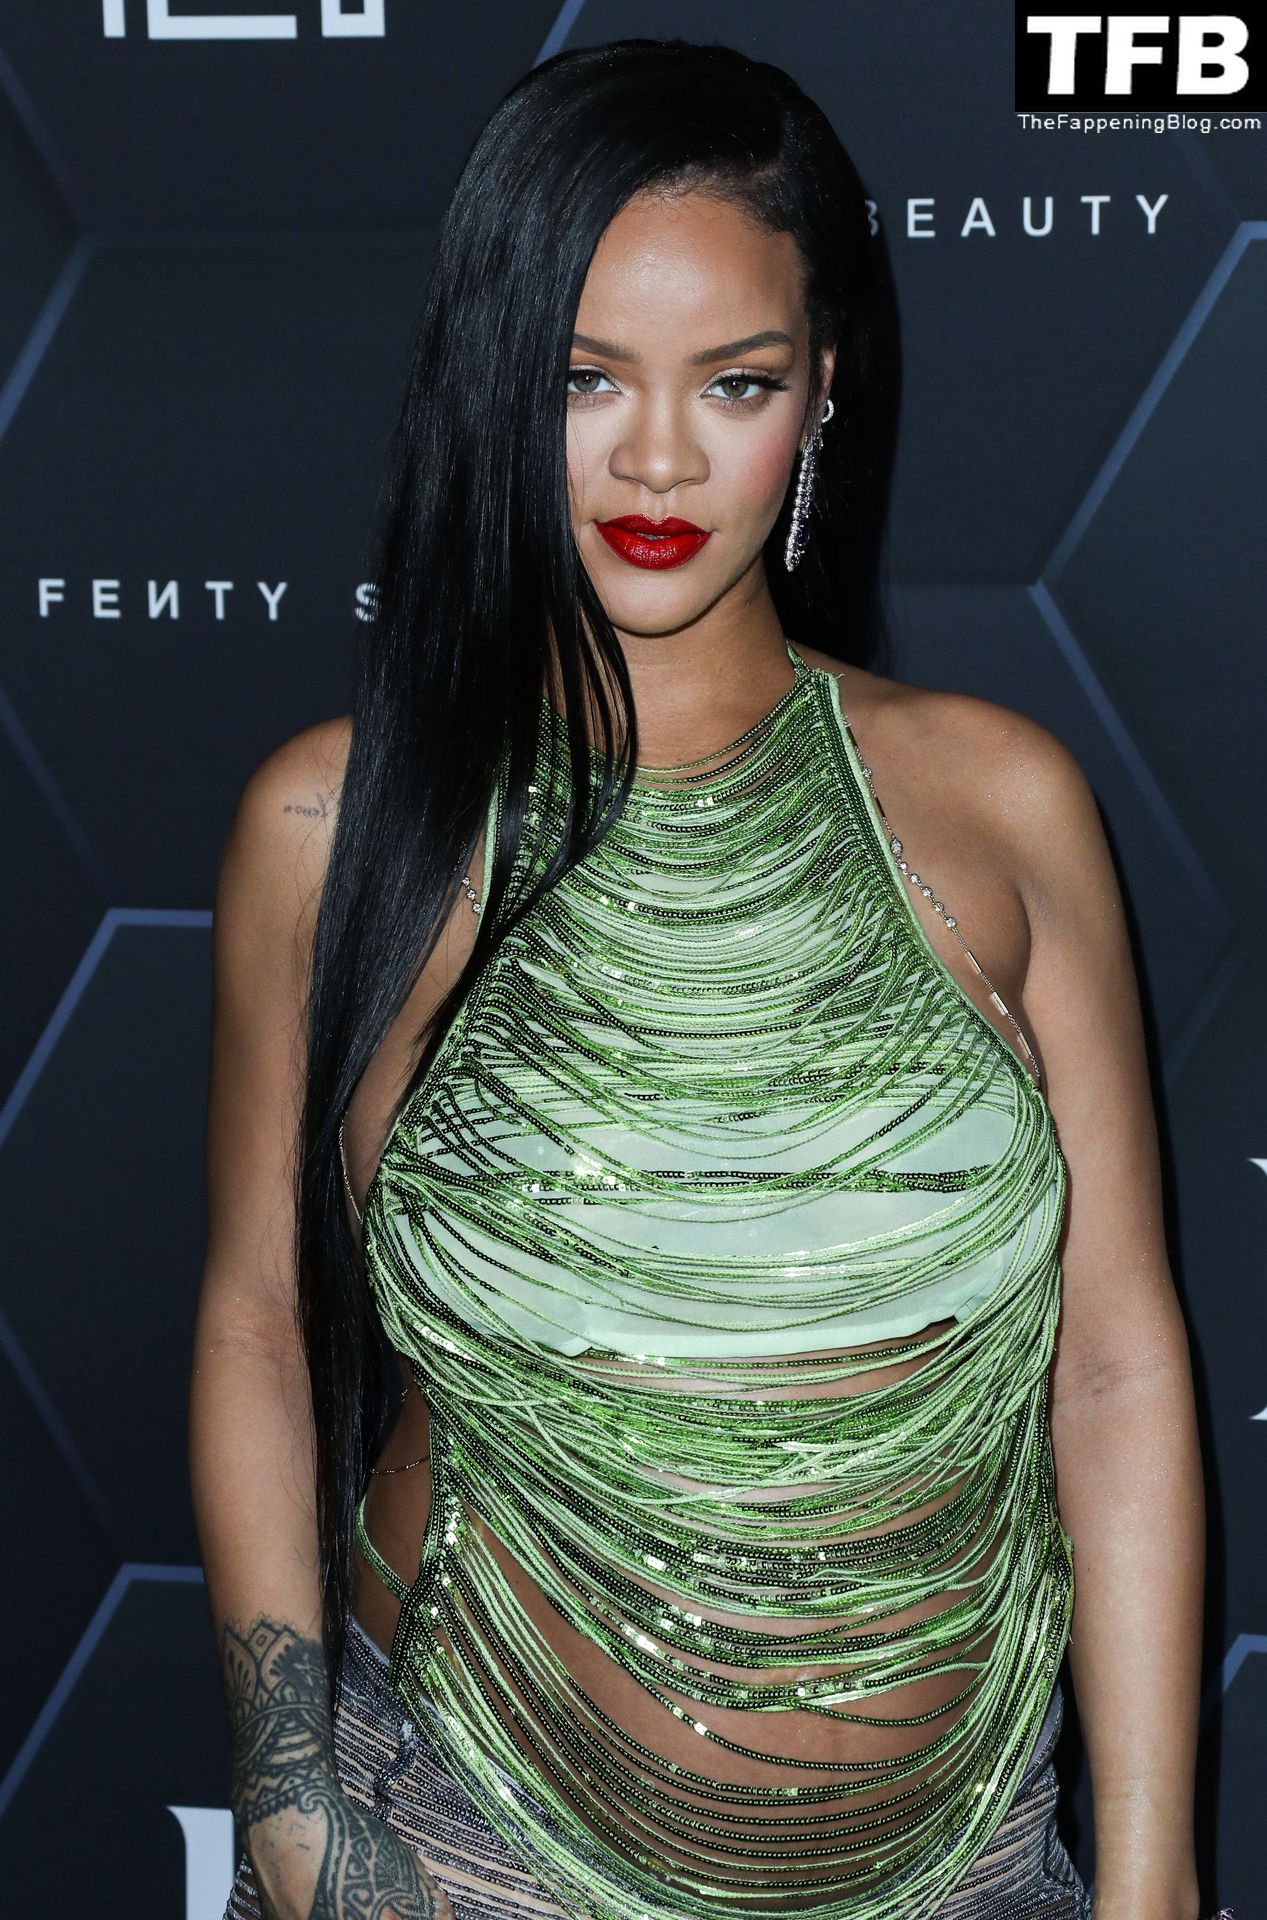 Rihanna-Sexy-The-Fappening-Blog-133.jpg